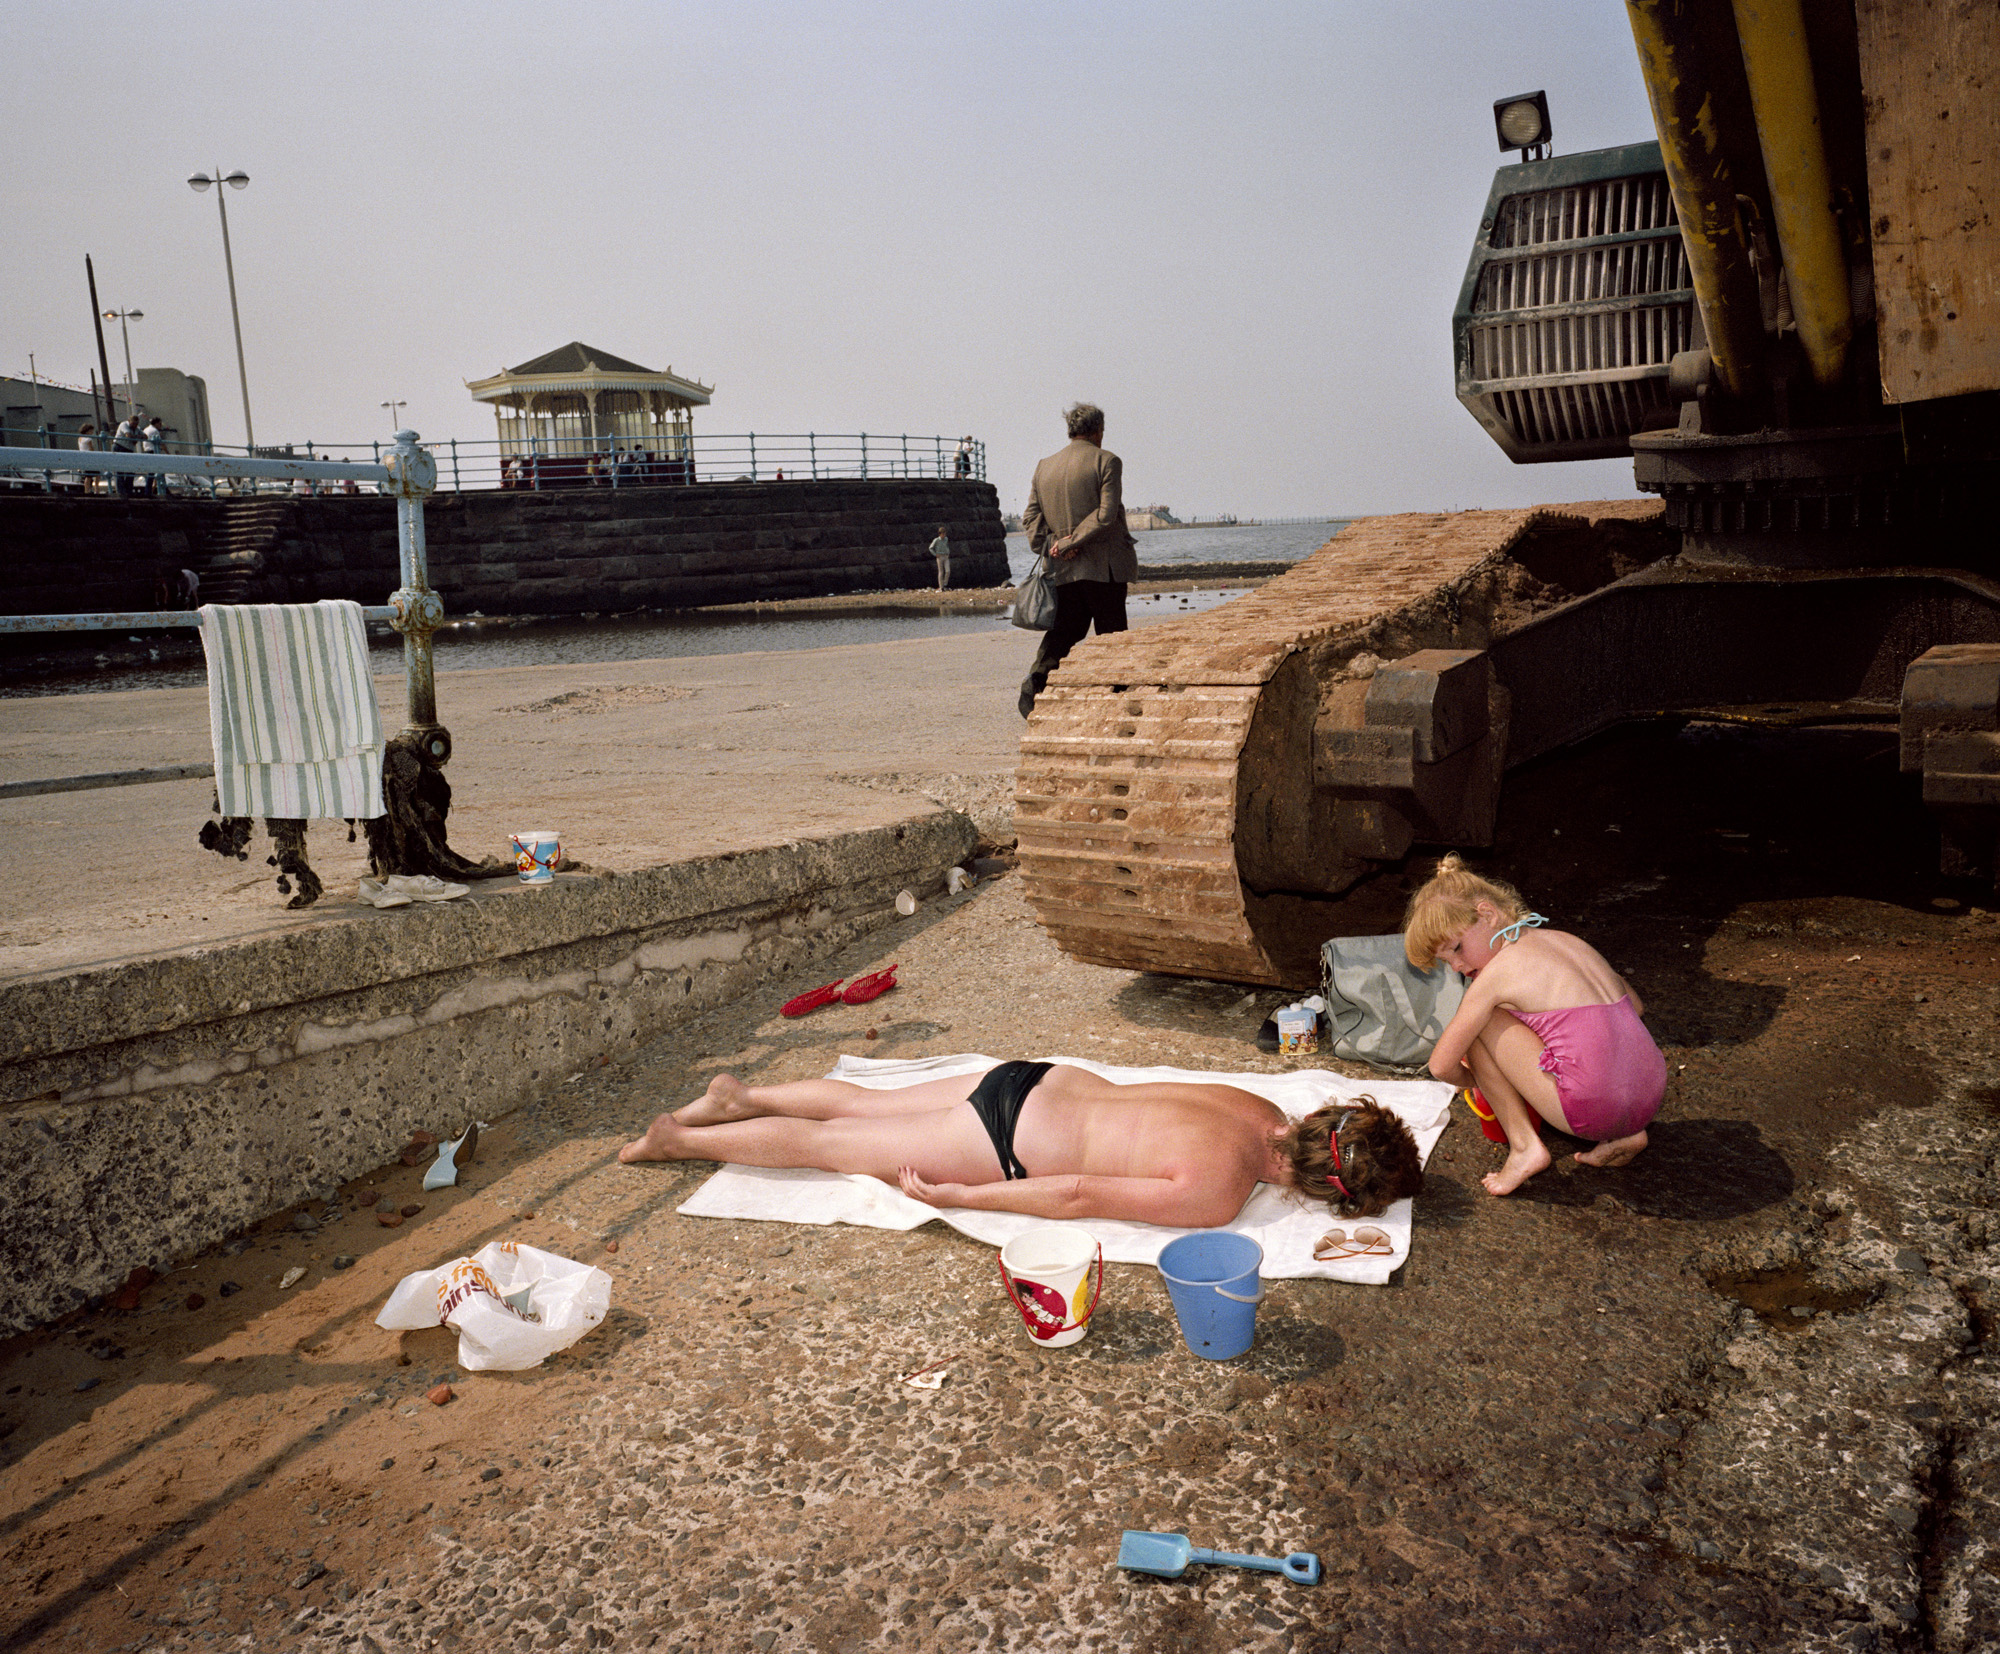 New Brighton, England, 1983-85. Aus der Serie "The last Resort" © Martin Parr / Magnum Photos